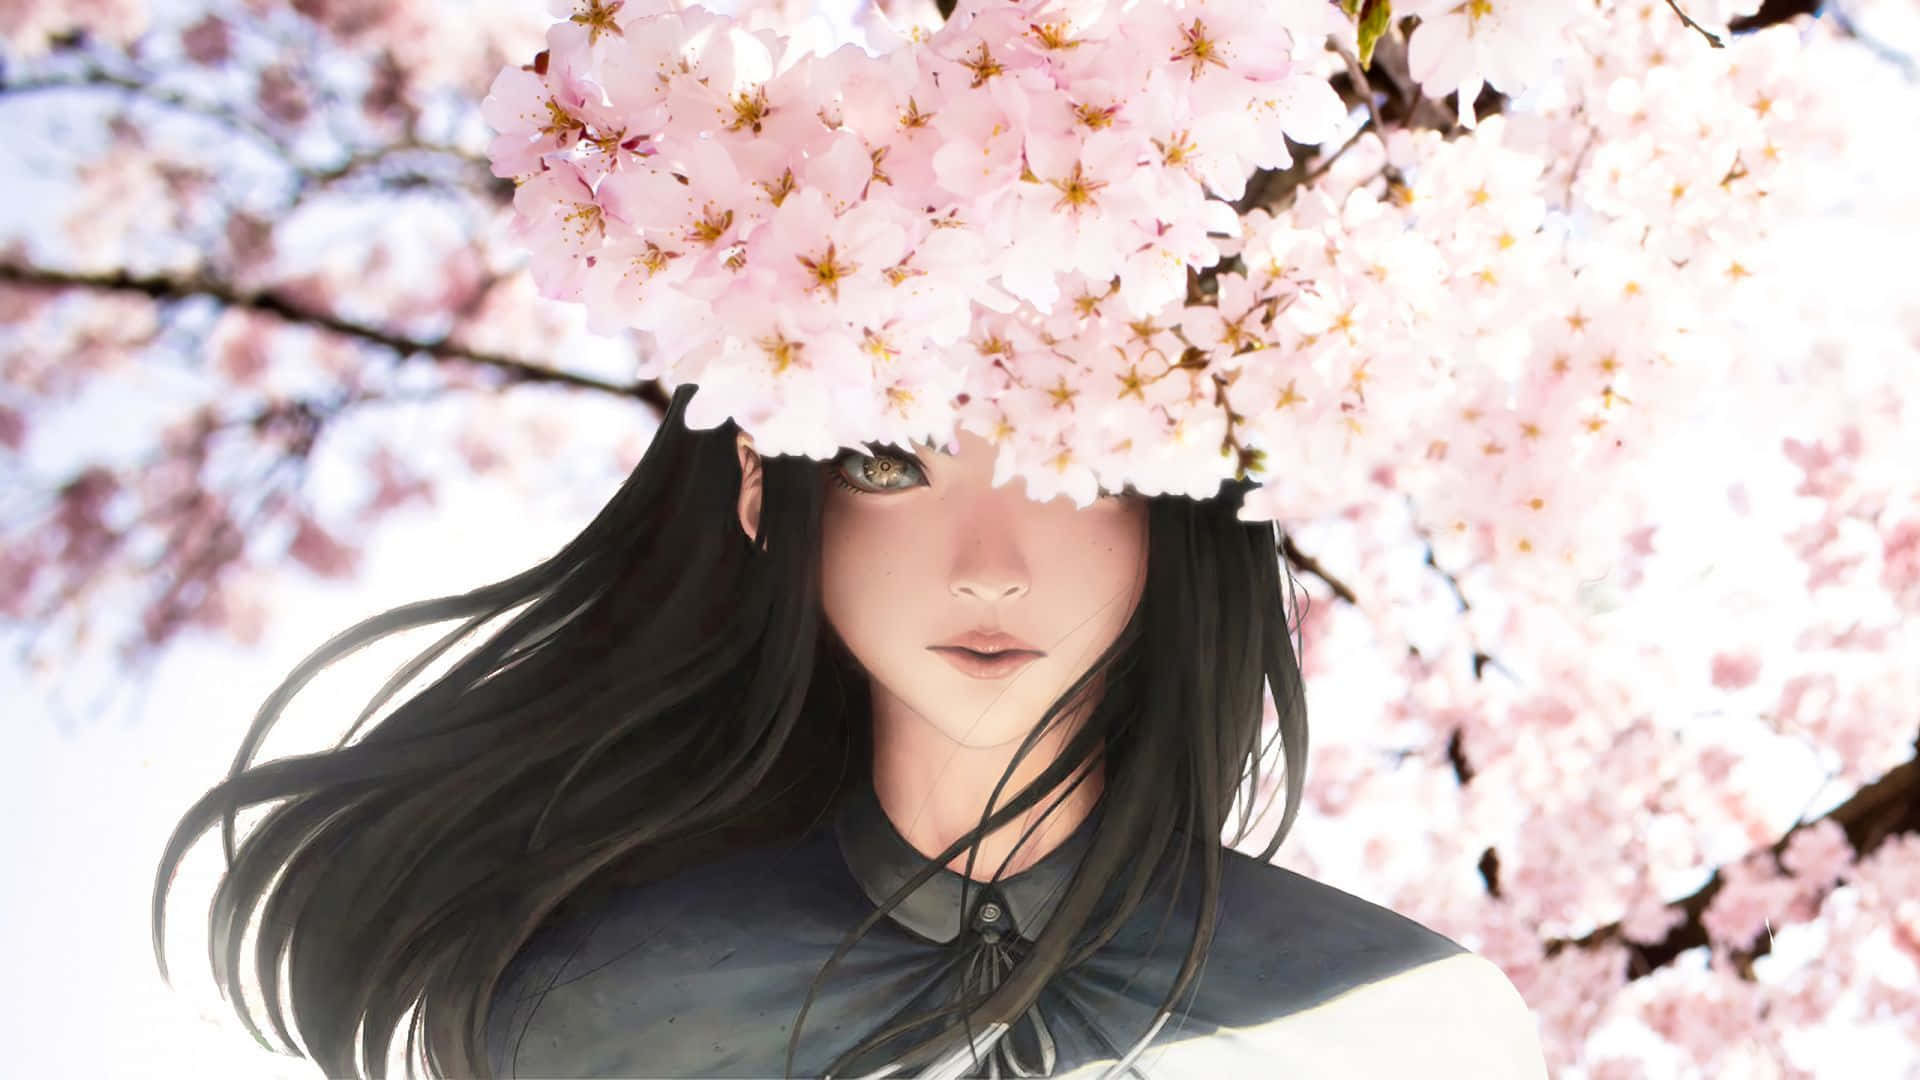 Cherry Blossom Sea Anime Scenery Wallpaper iPhone Phone 4K 1530f